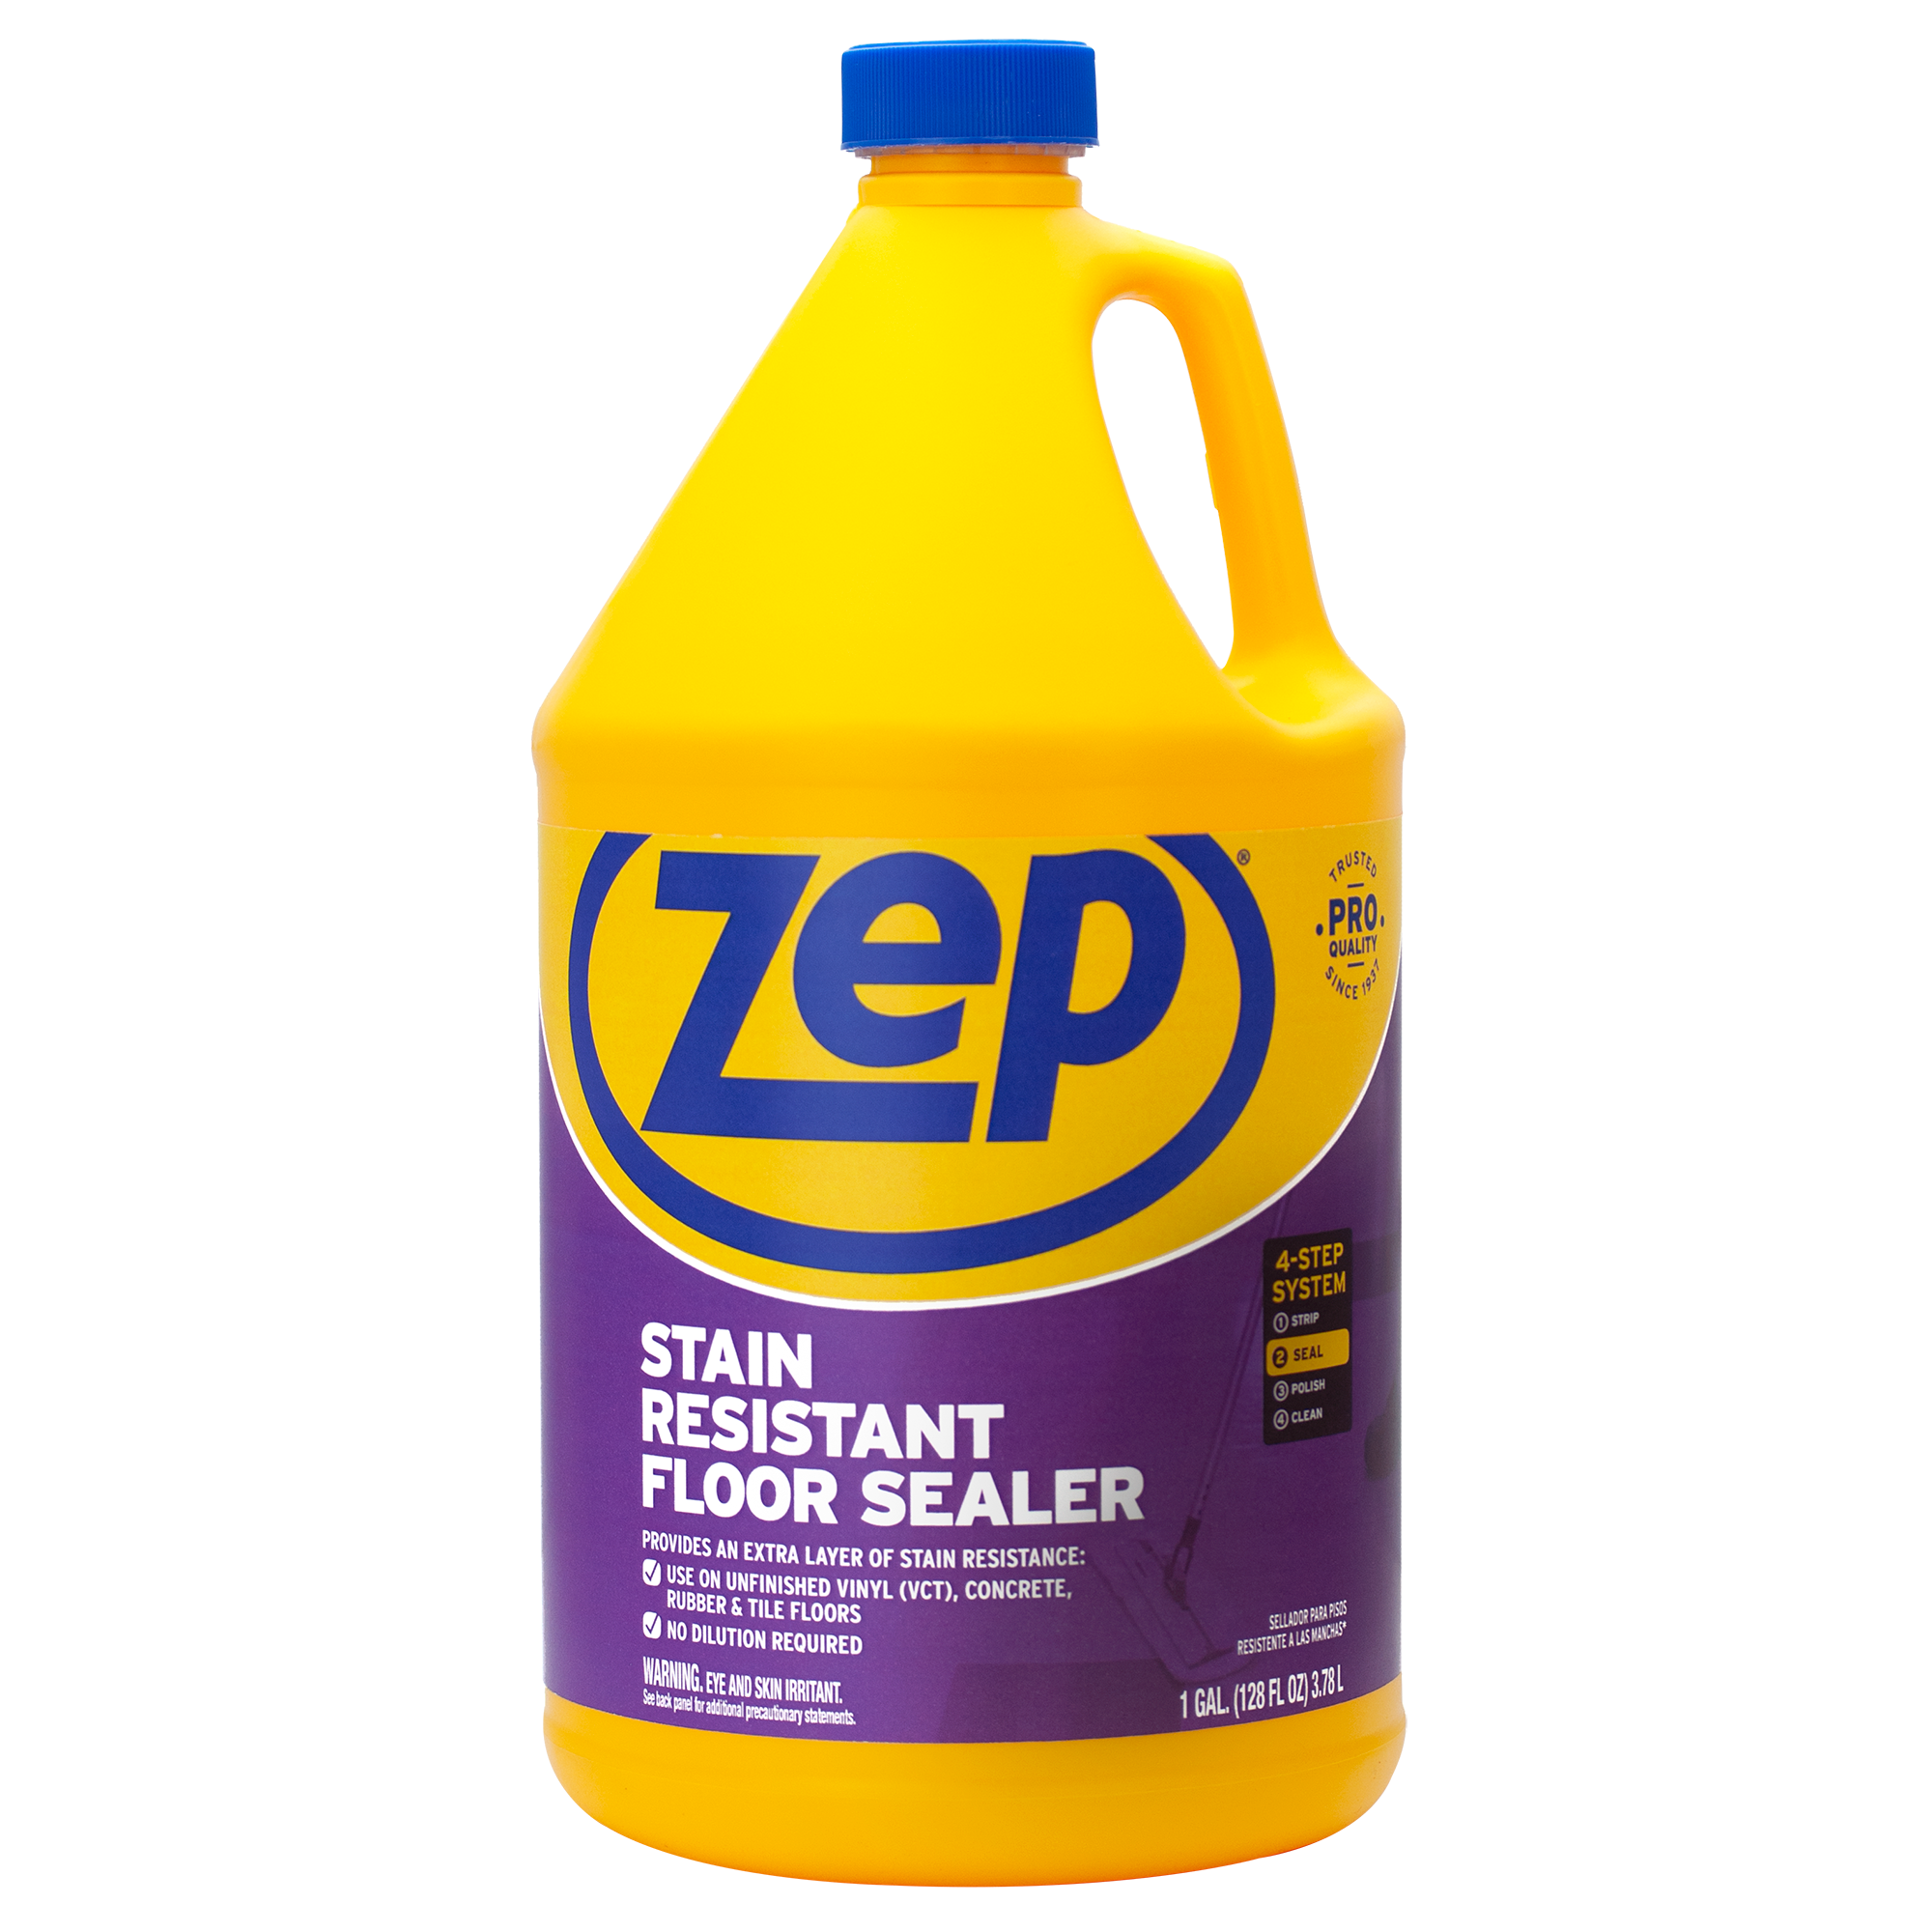 Zep Professional Sprayer Self Merchandising  Merchandising displays,  Sprayers, Merchandise